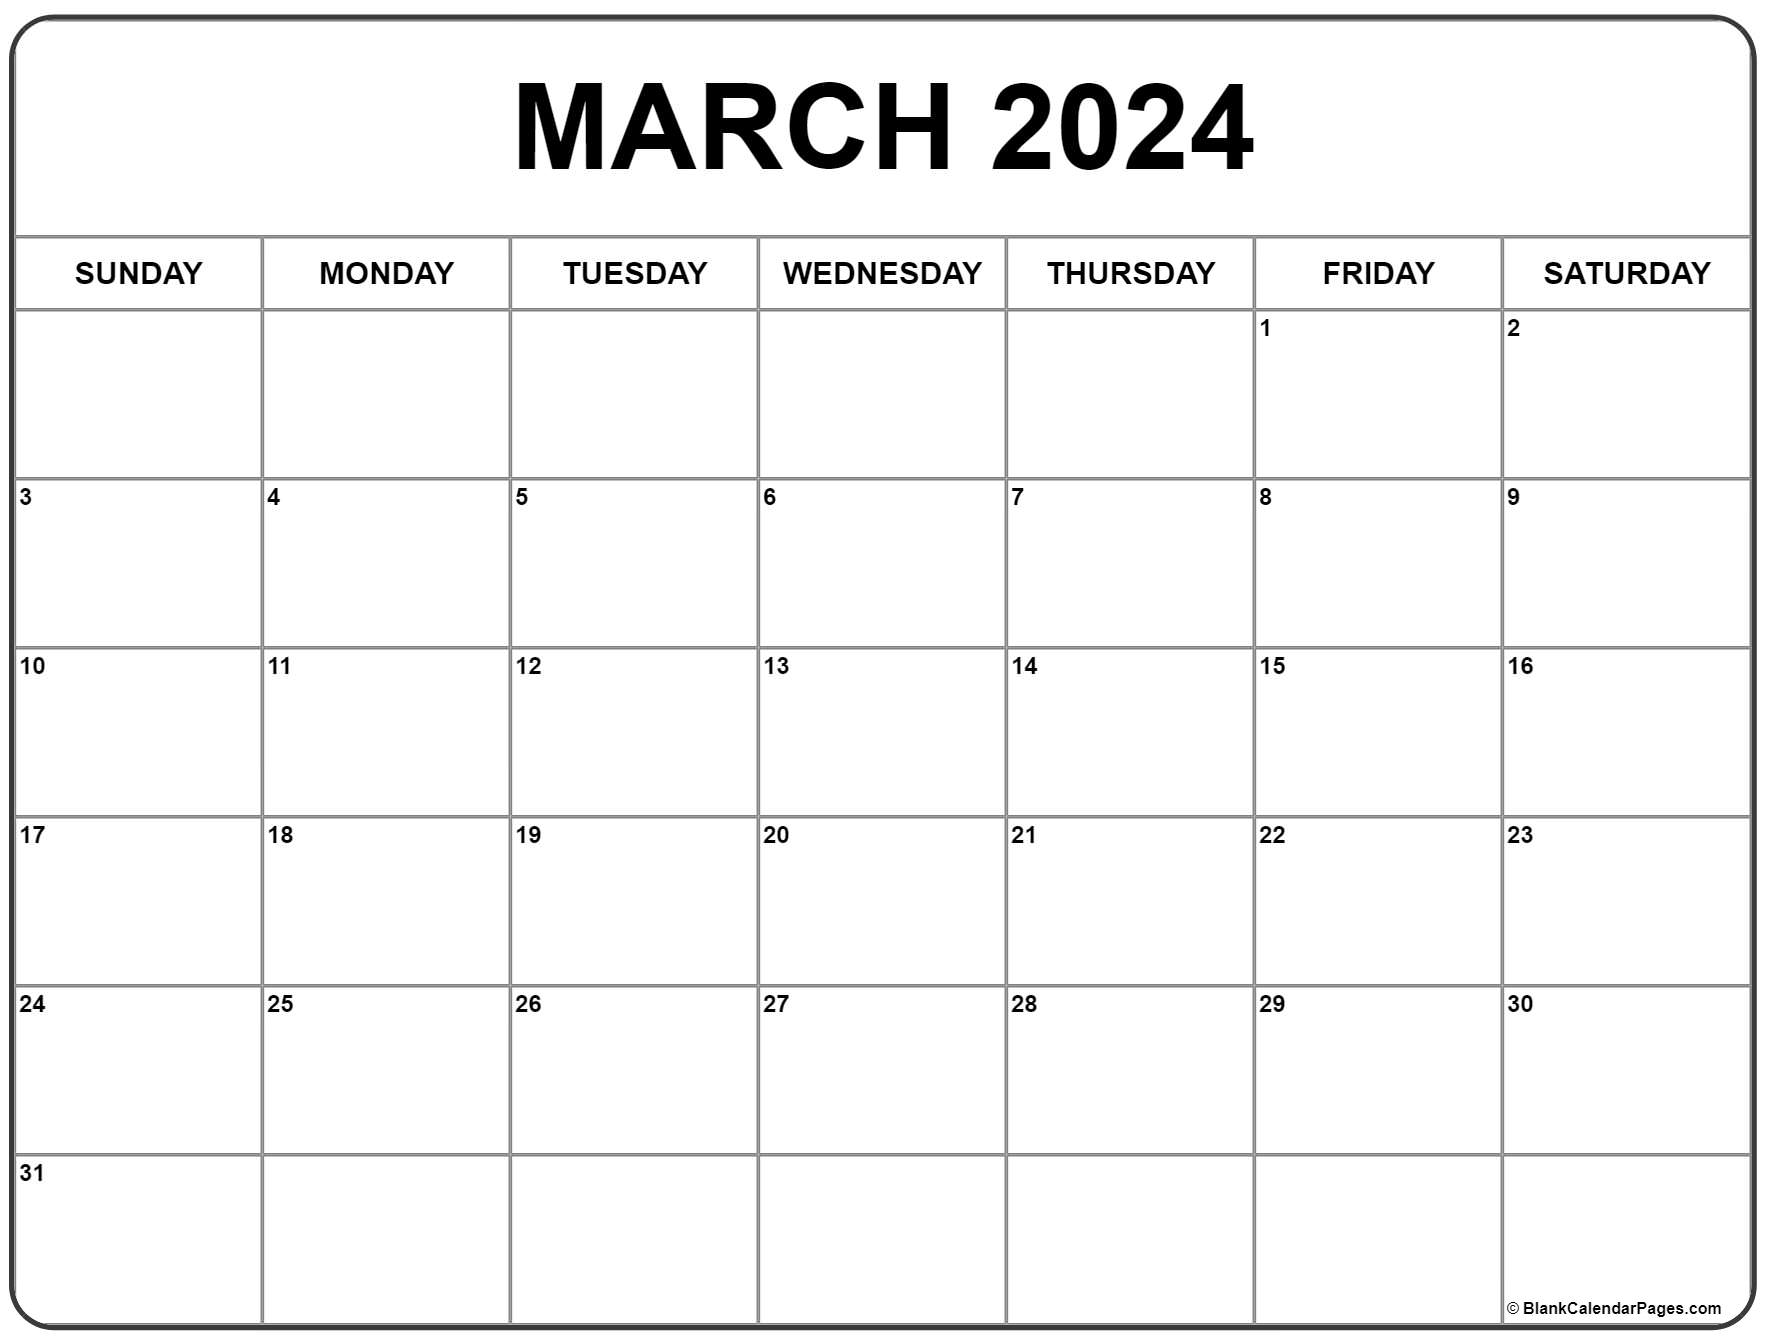 March 2024 Calendar | Free Printable Calendar for Free Printable Calendar March 2024